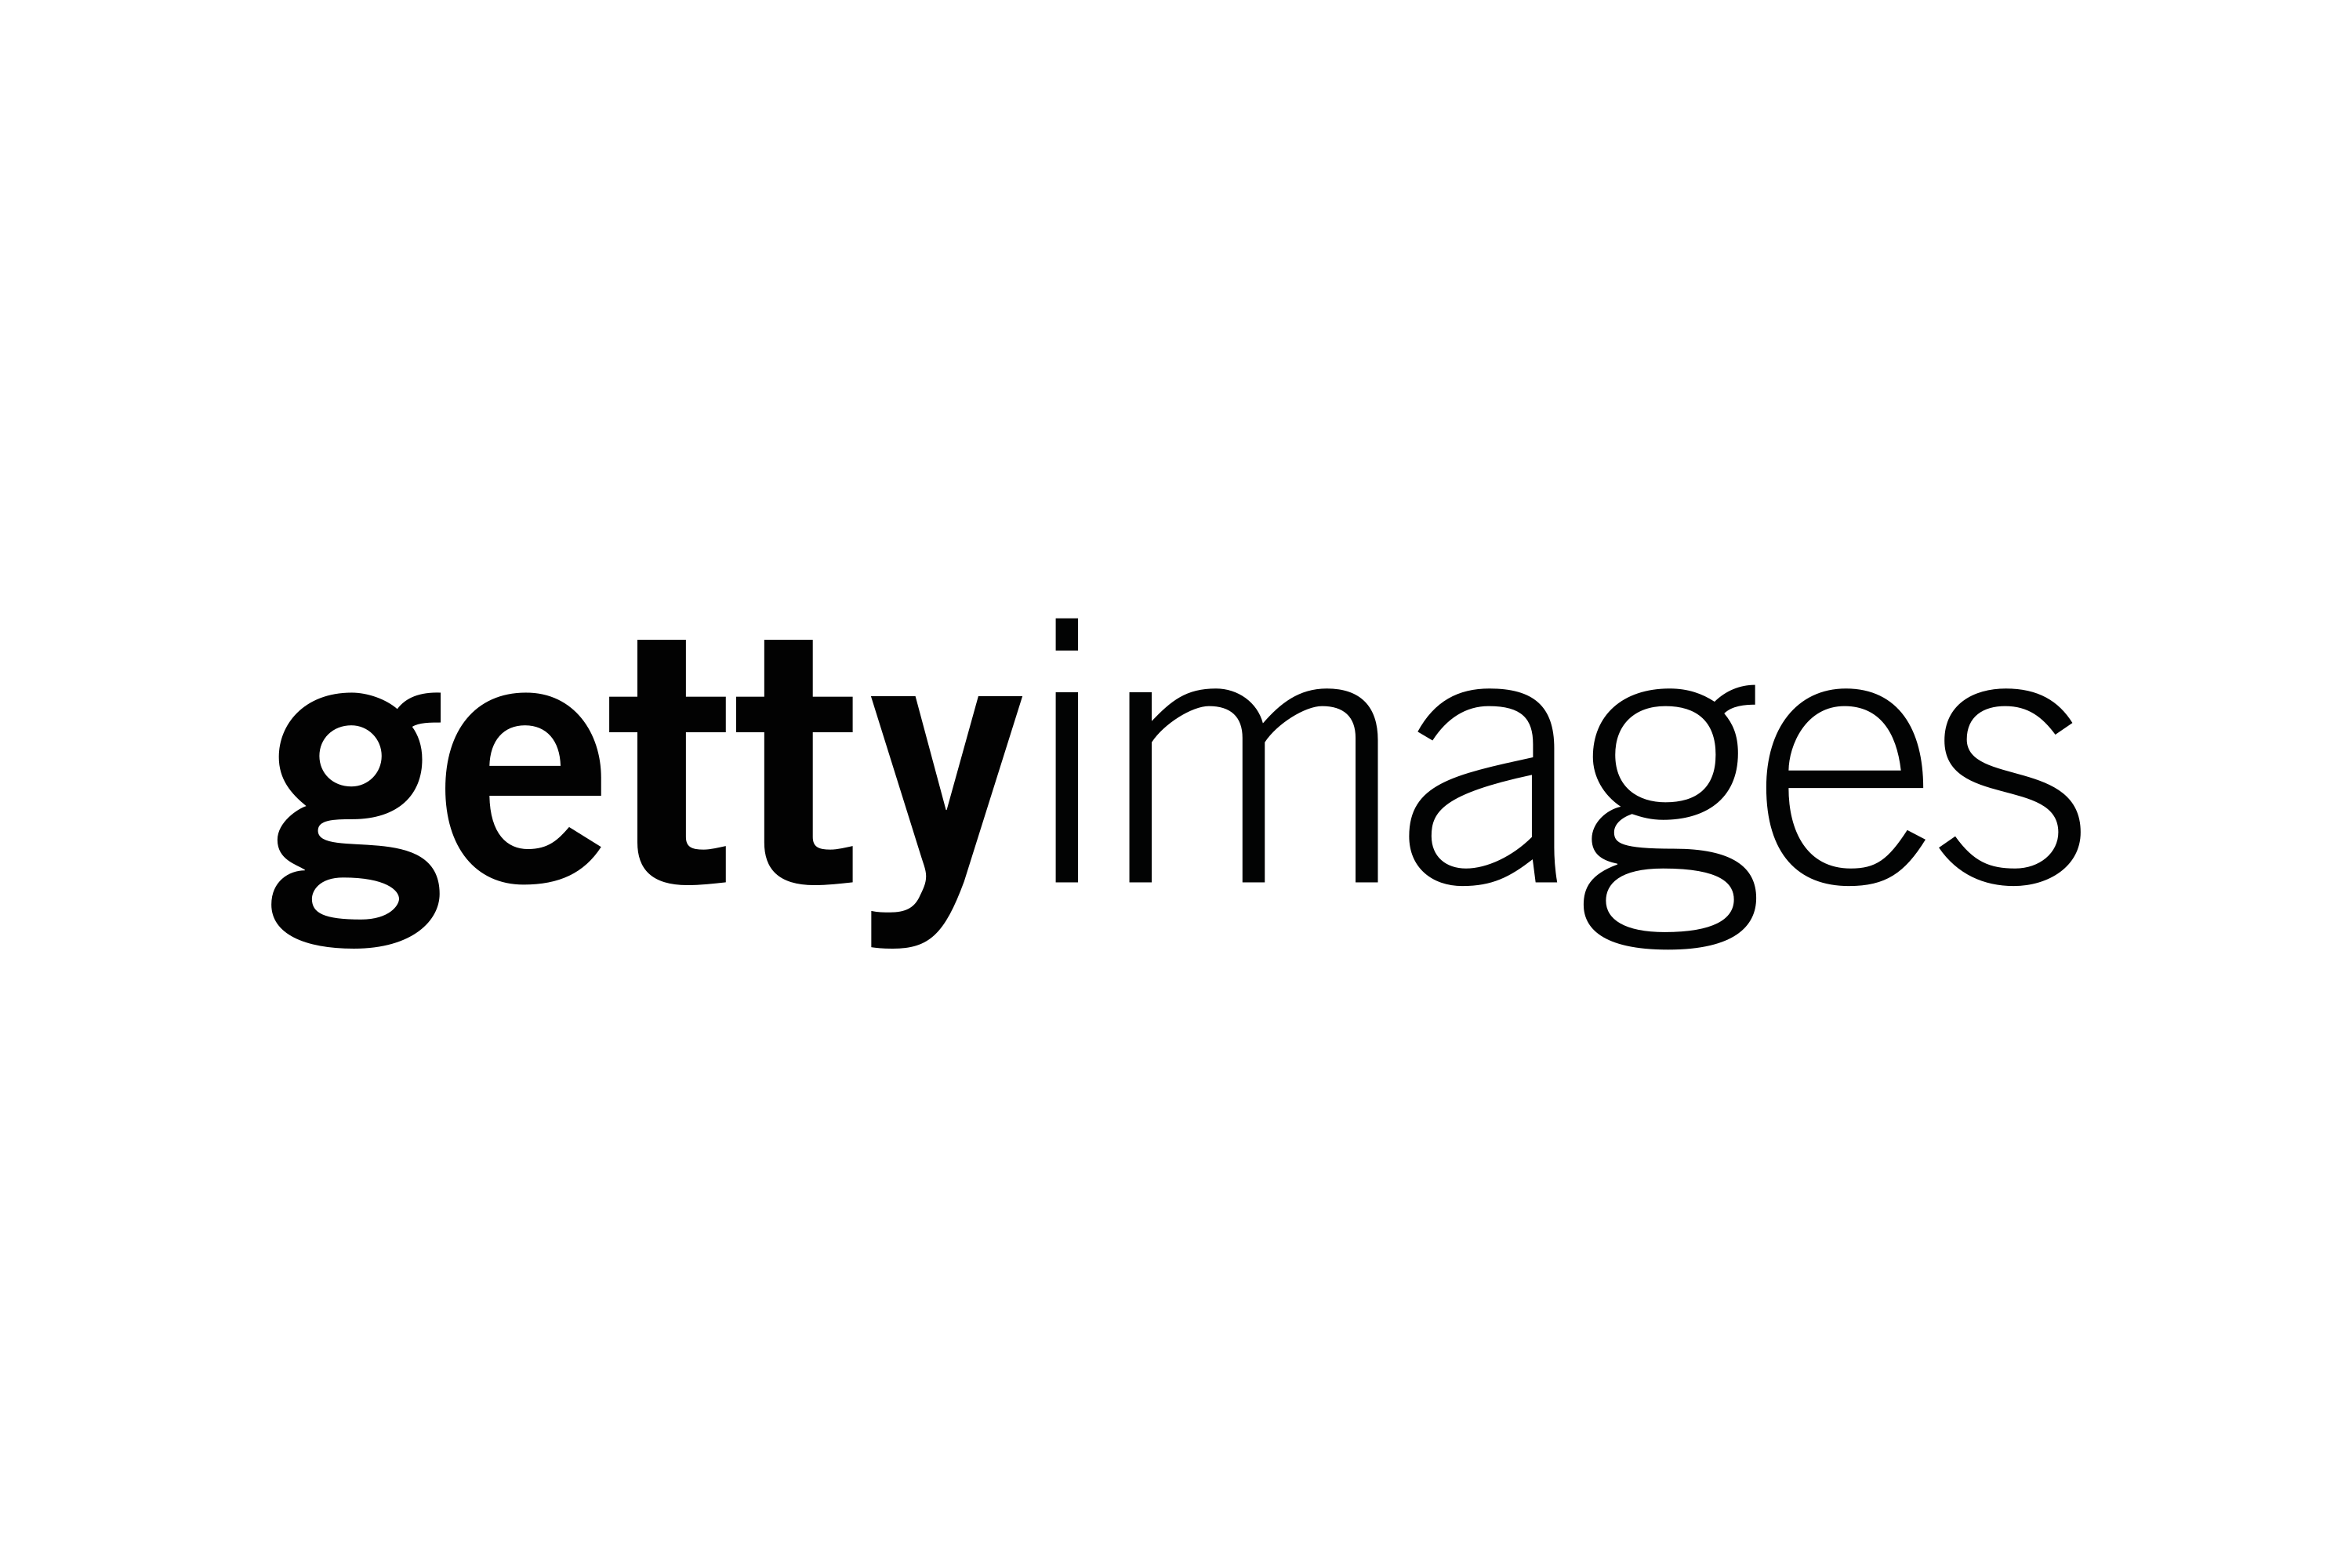 Download Getty Images Logo in SVG Vector or PNG File Format - Logo.wine